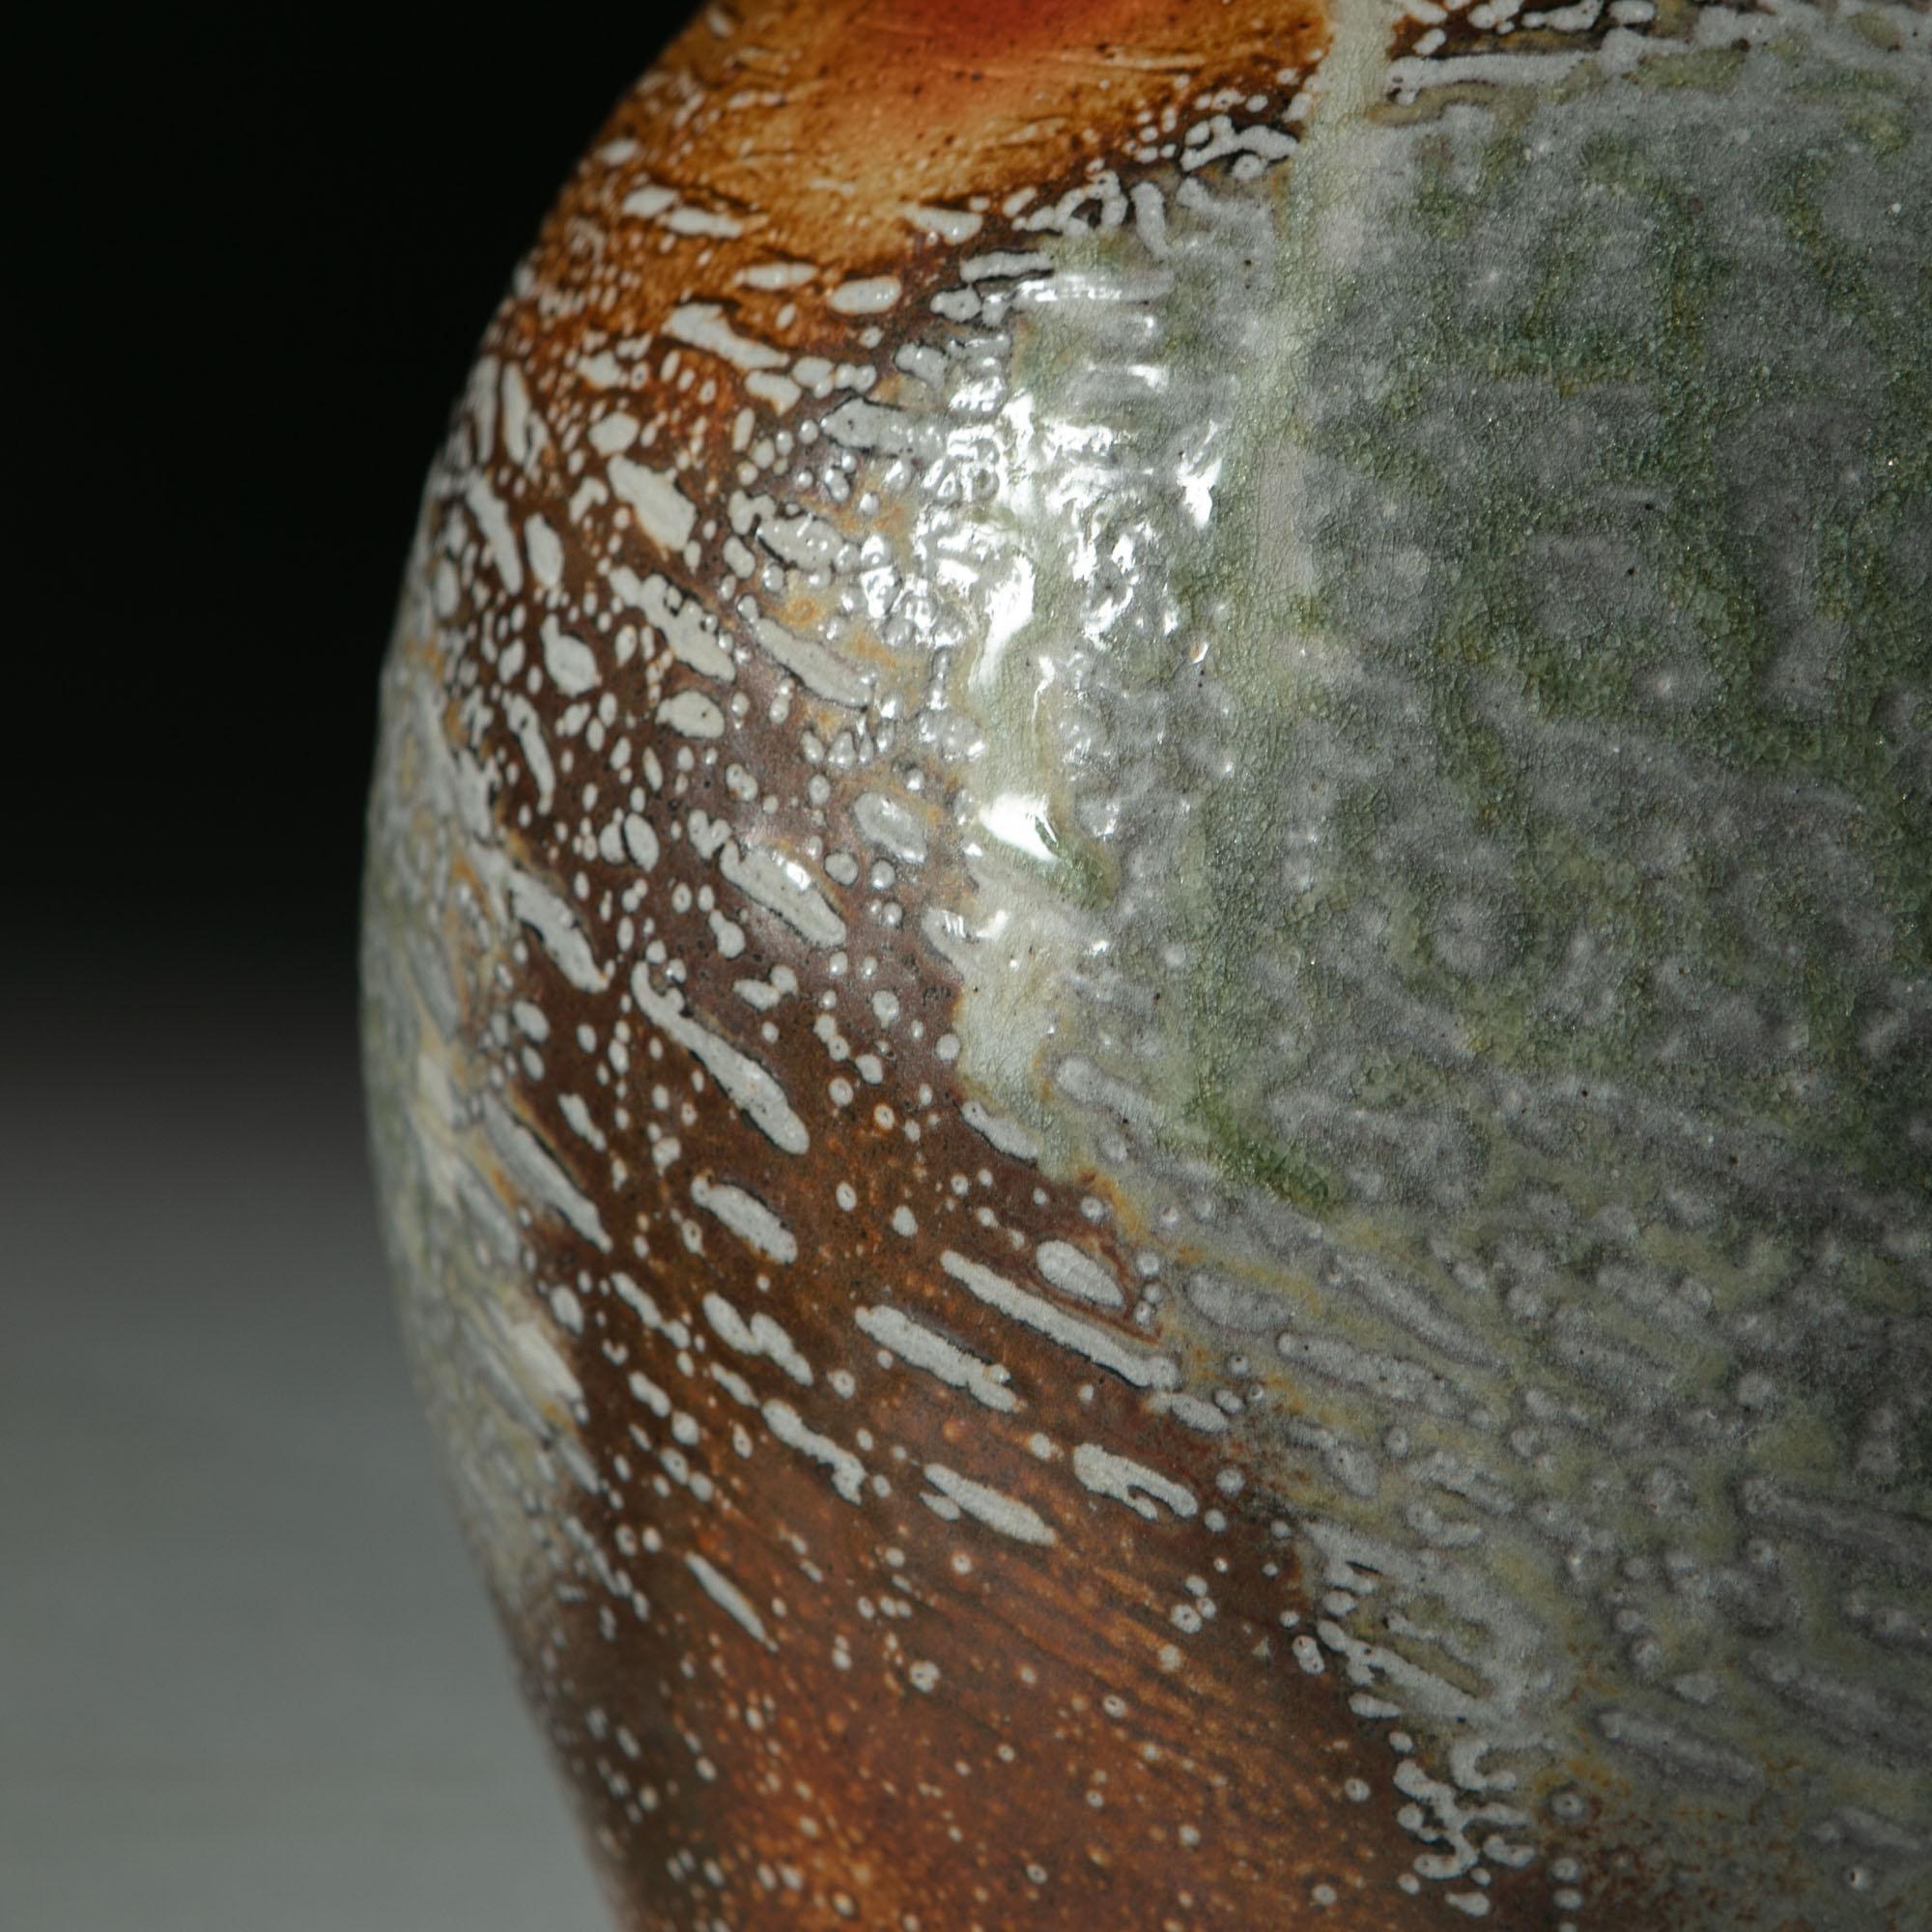 art pottery lamp